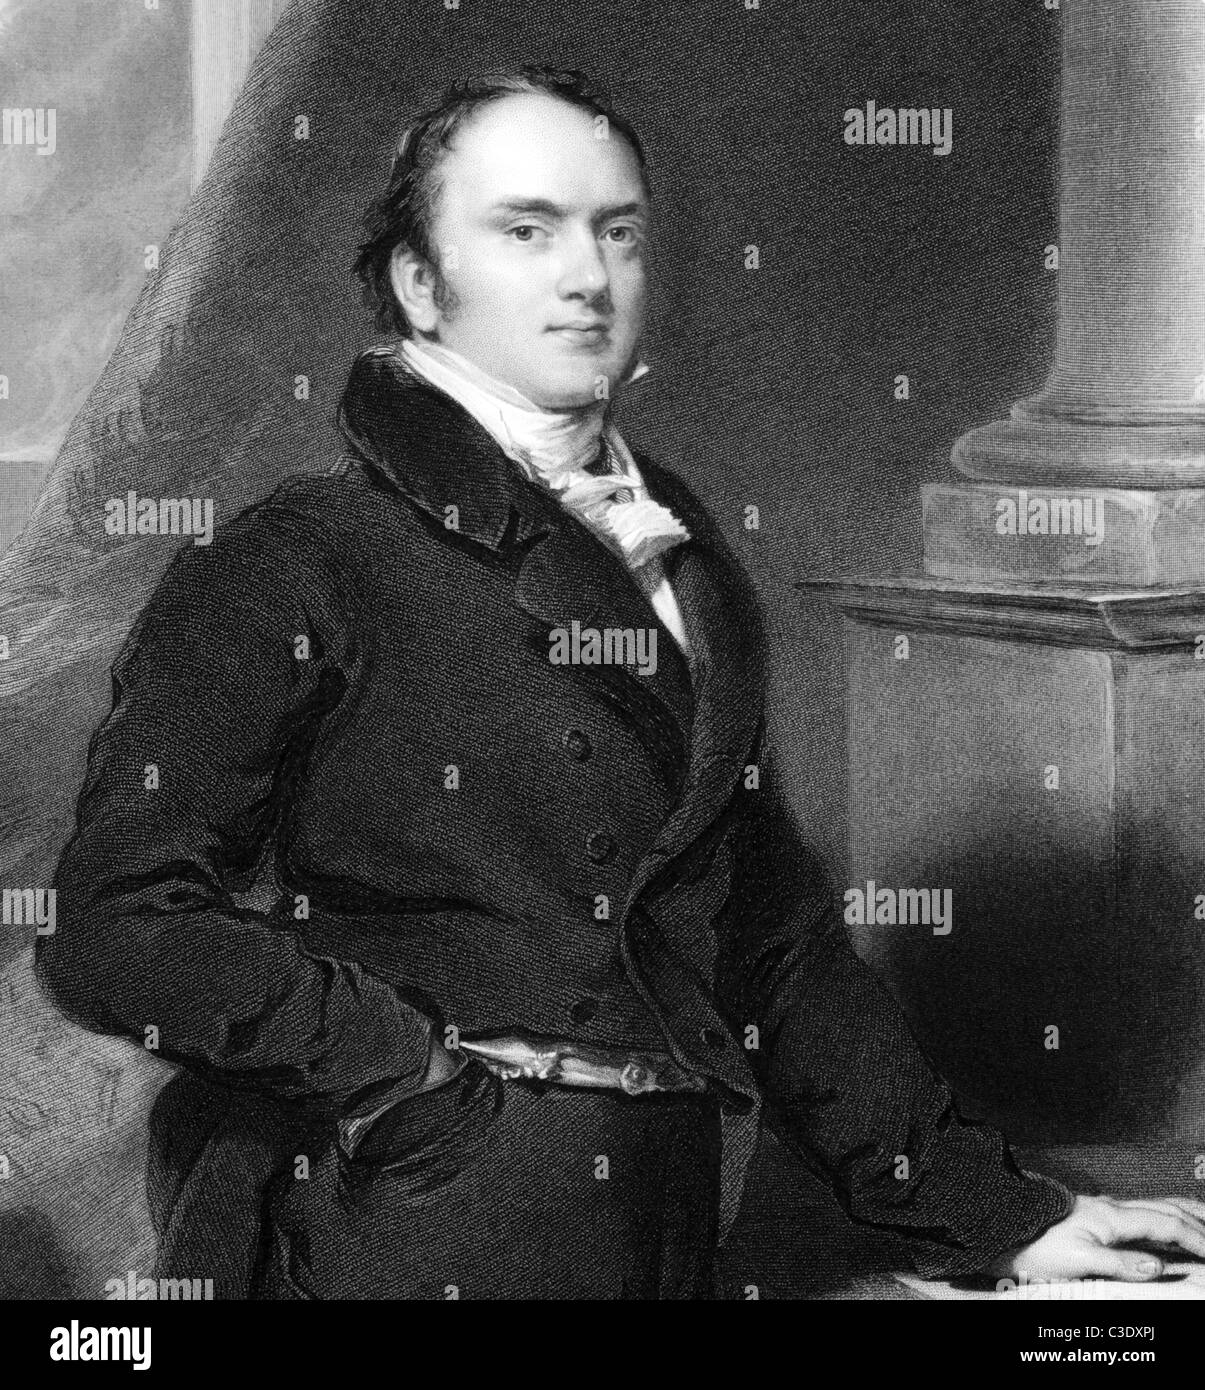 Alexander Baring, 1st Baron Ashburton (1774-1848) on engraving from 1838. British politician and financier. Stock Photo